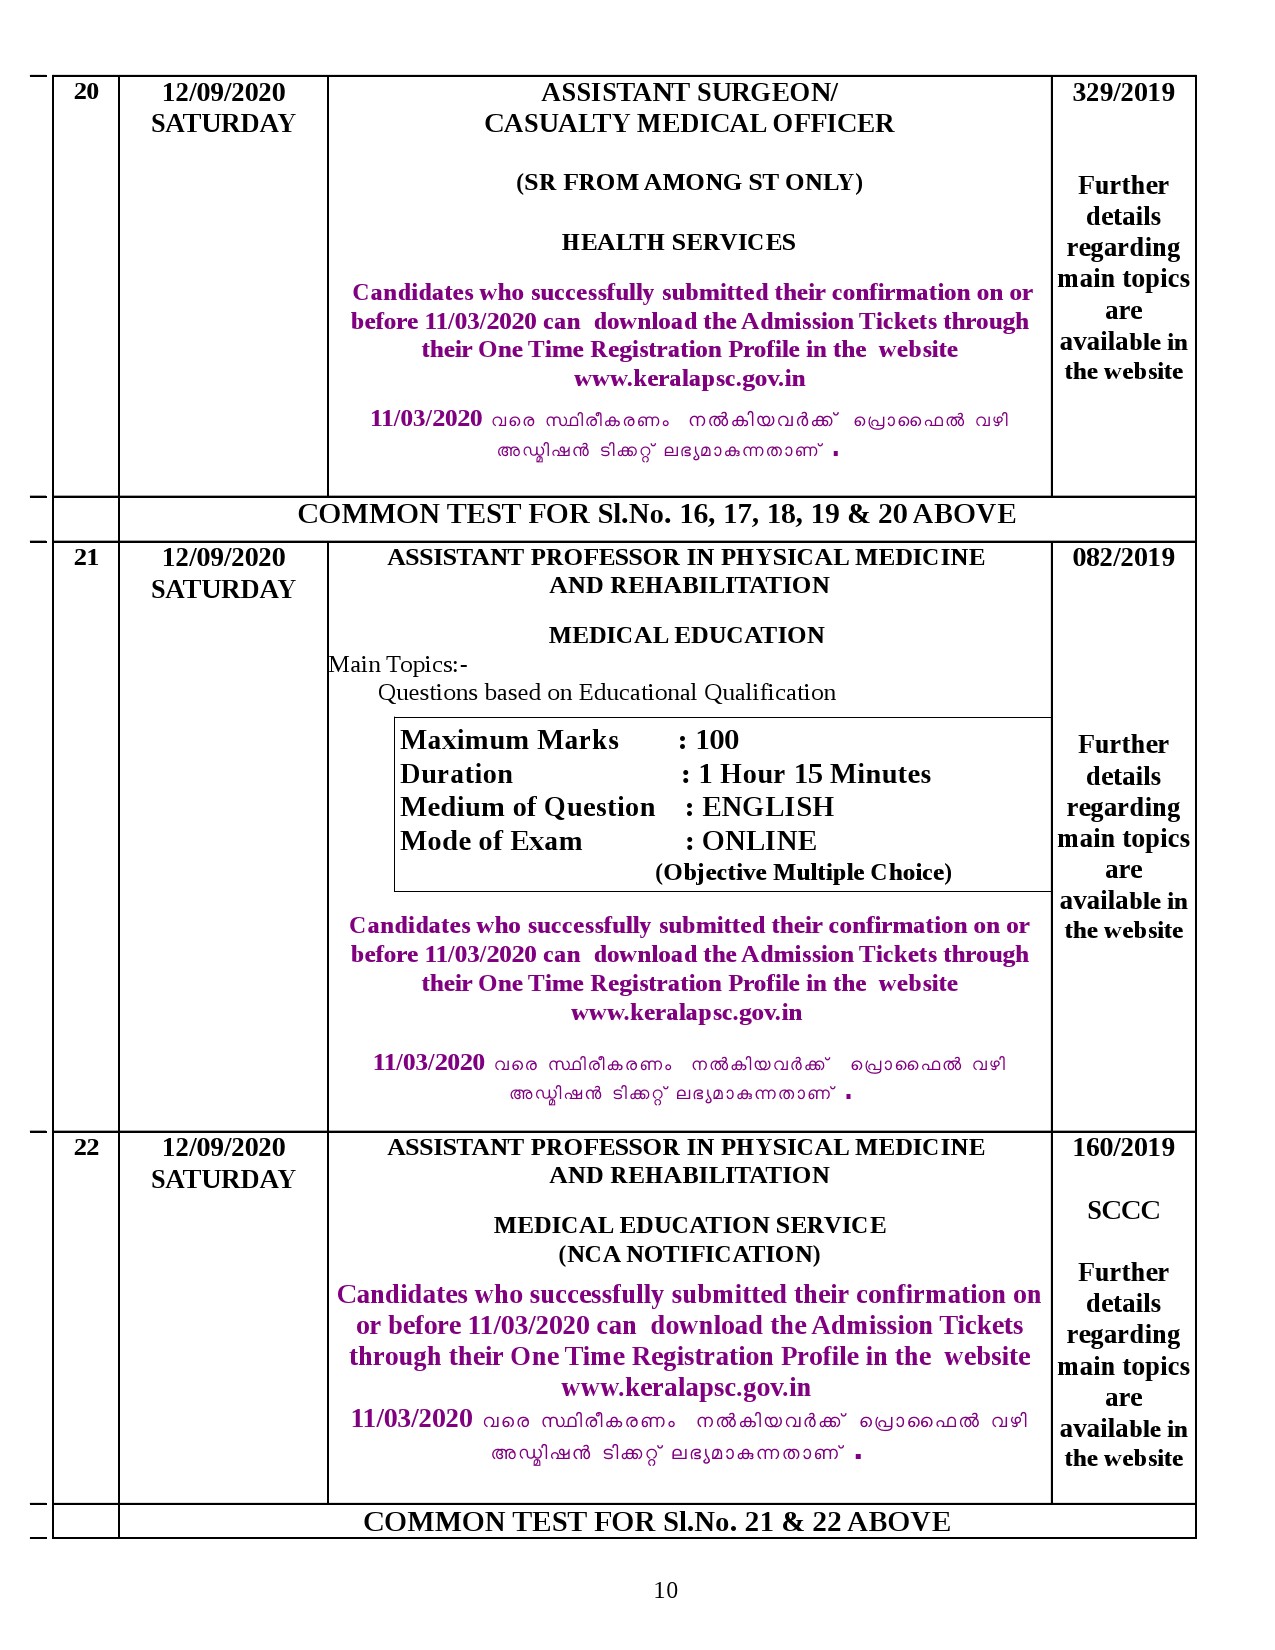 Kerala PSC Exam Calendar September 2020 - Notification Image 10